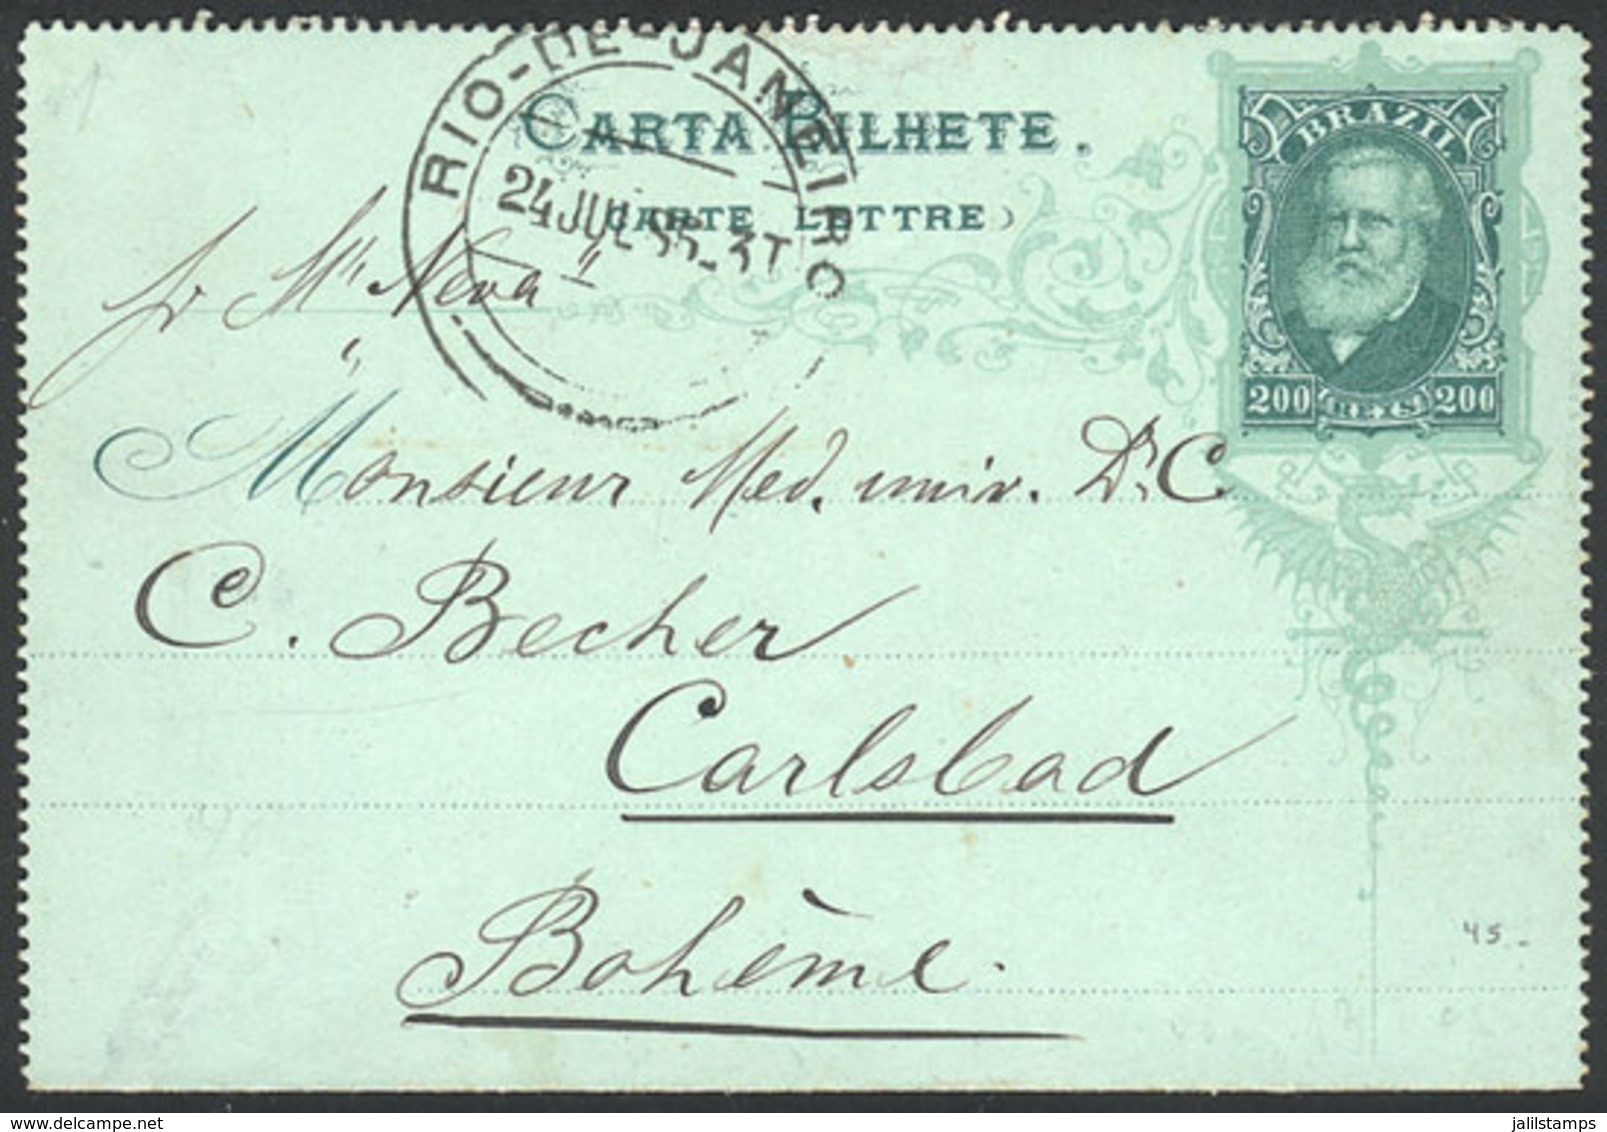 BRAZIL: RHM.CB-16, Used Lettercard, Very Fine Quality, Catalog Value 1,900Rs., Low Start! - Postal Stationery